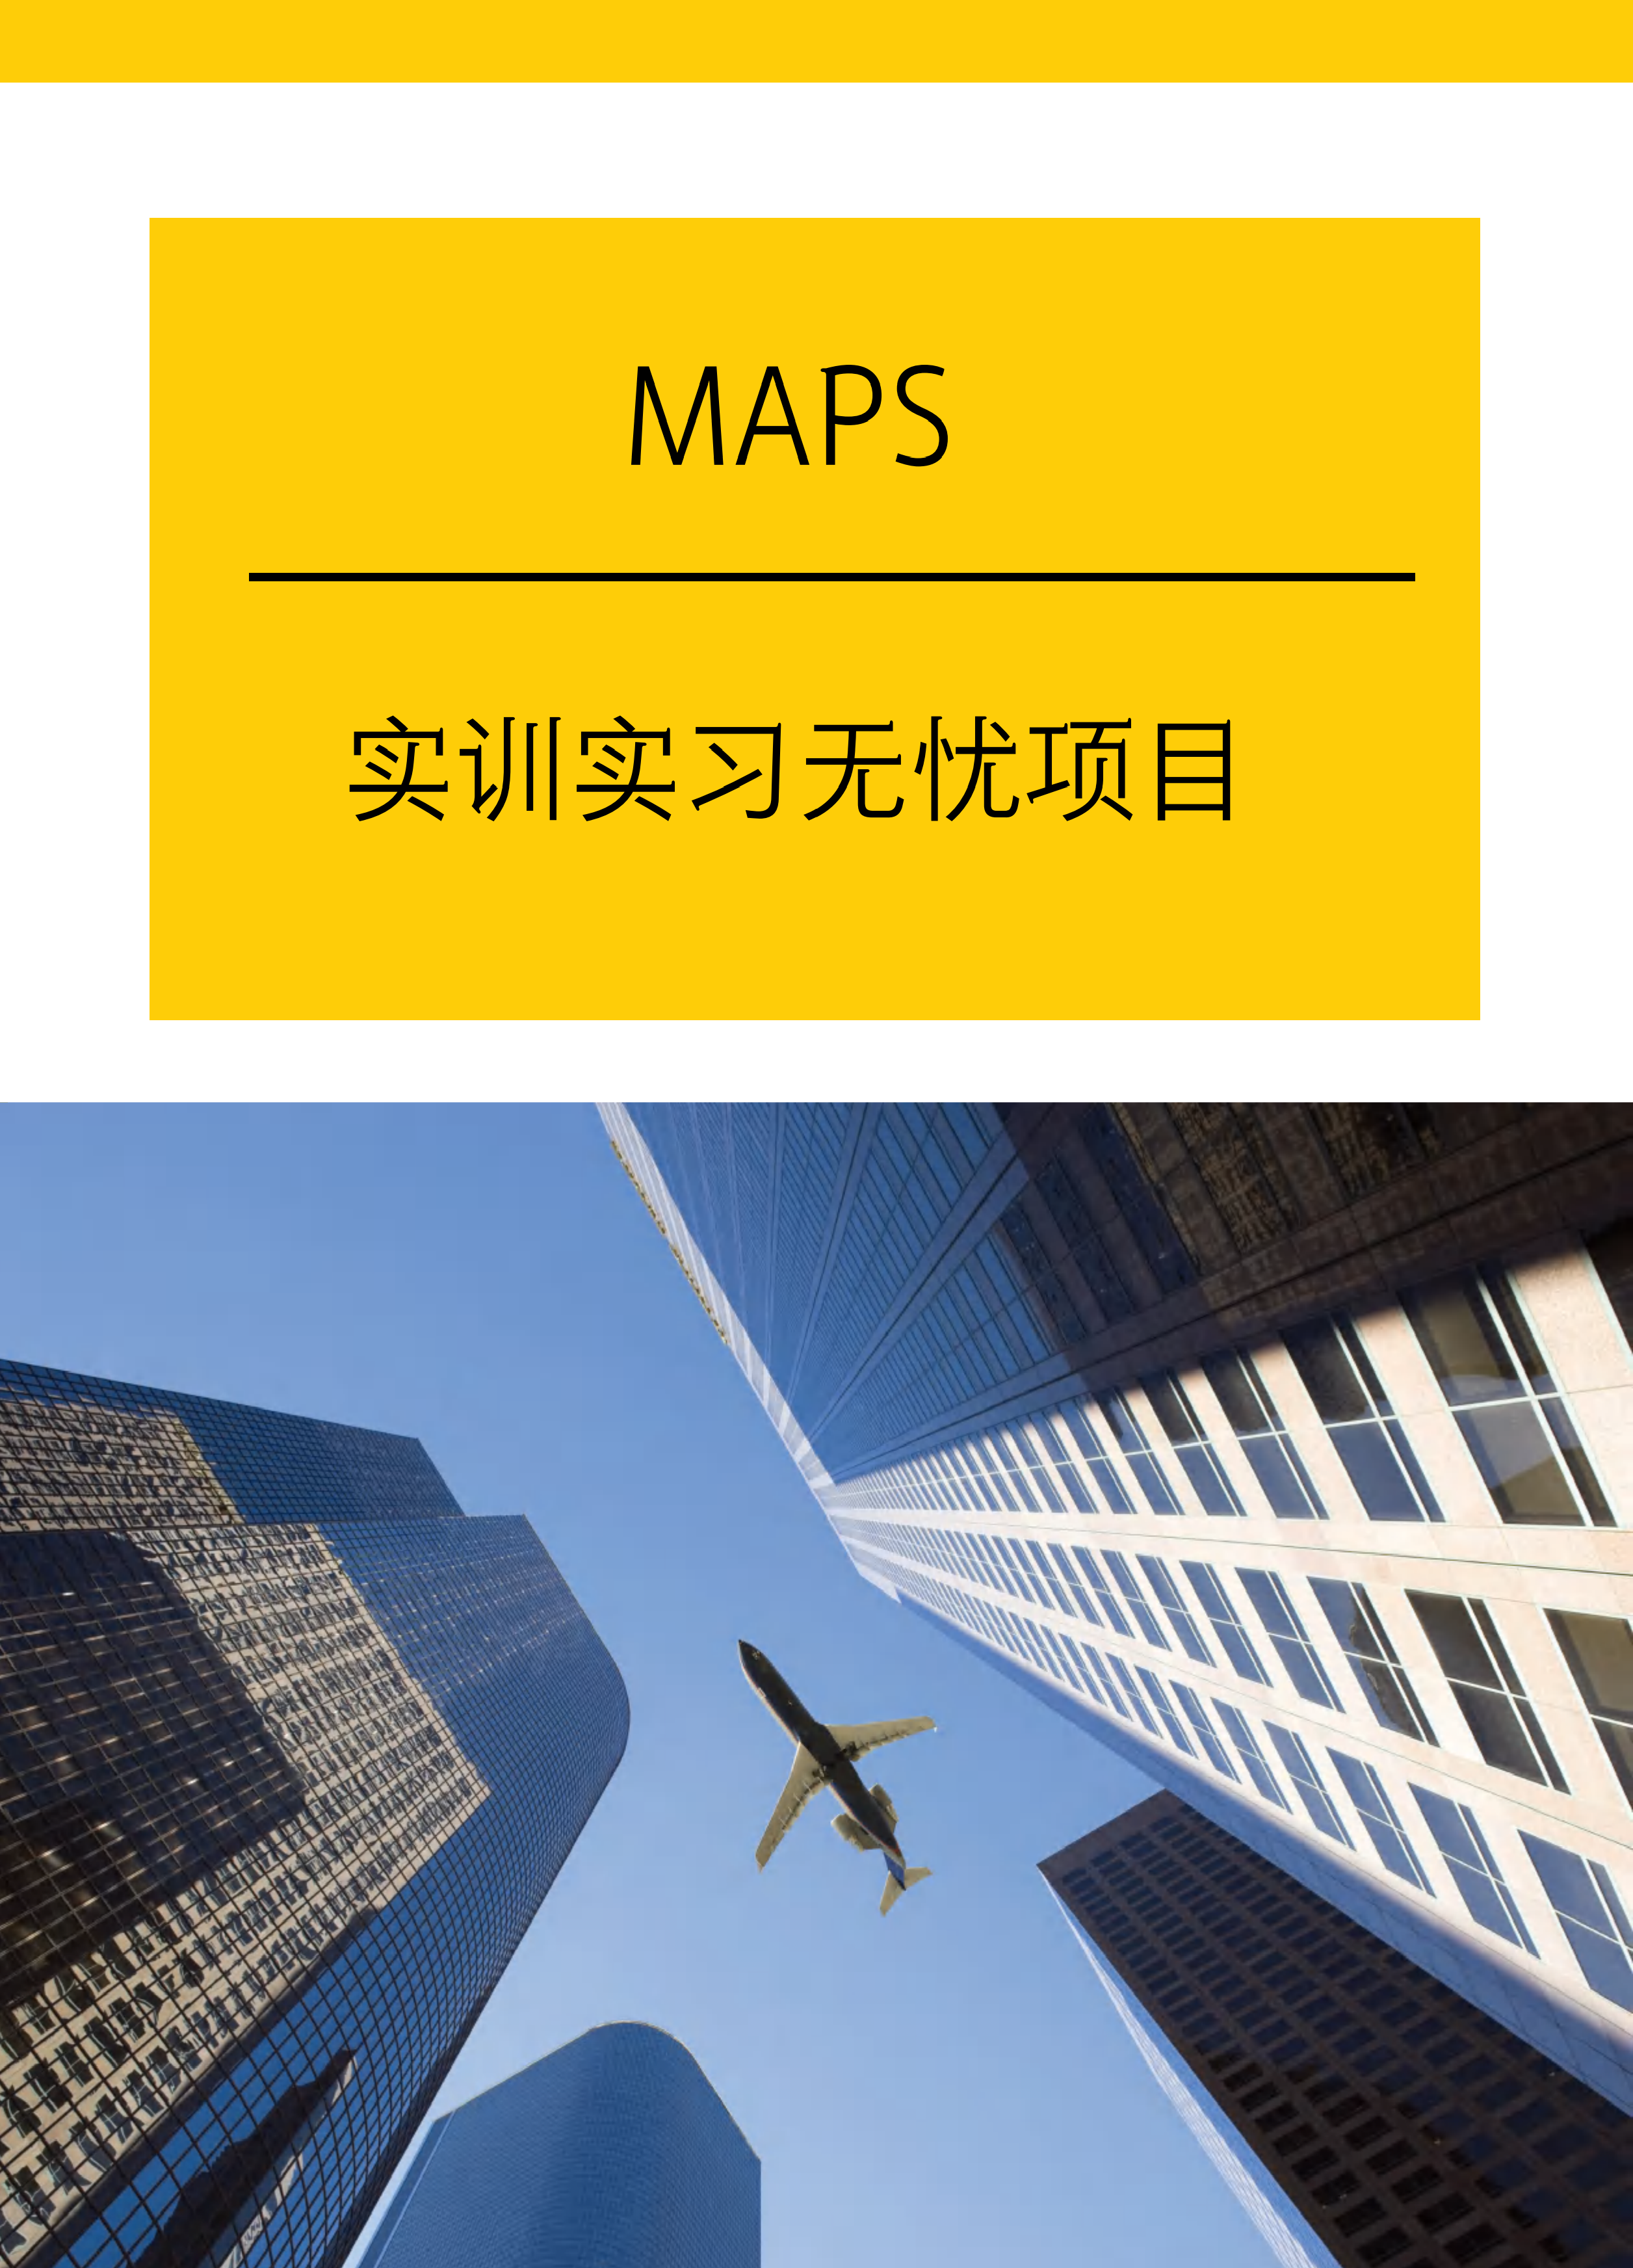 （已压缩）MAPS宣传册画册_001.png